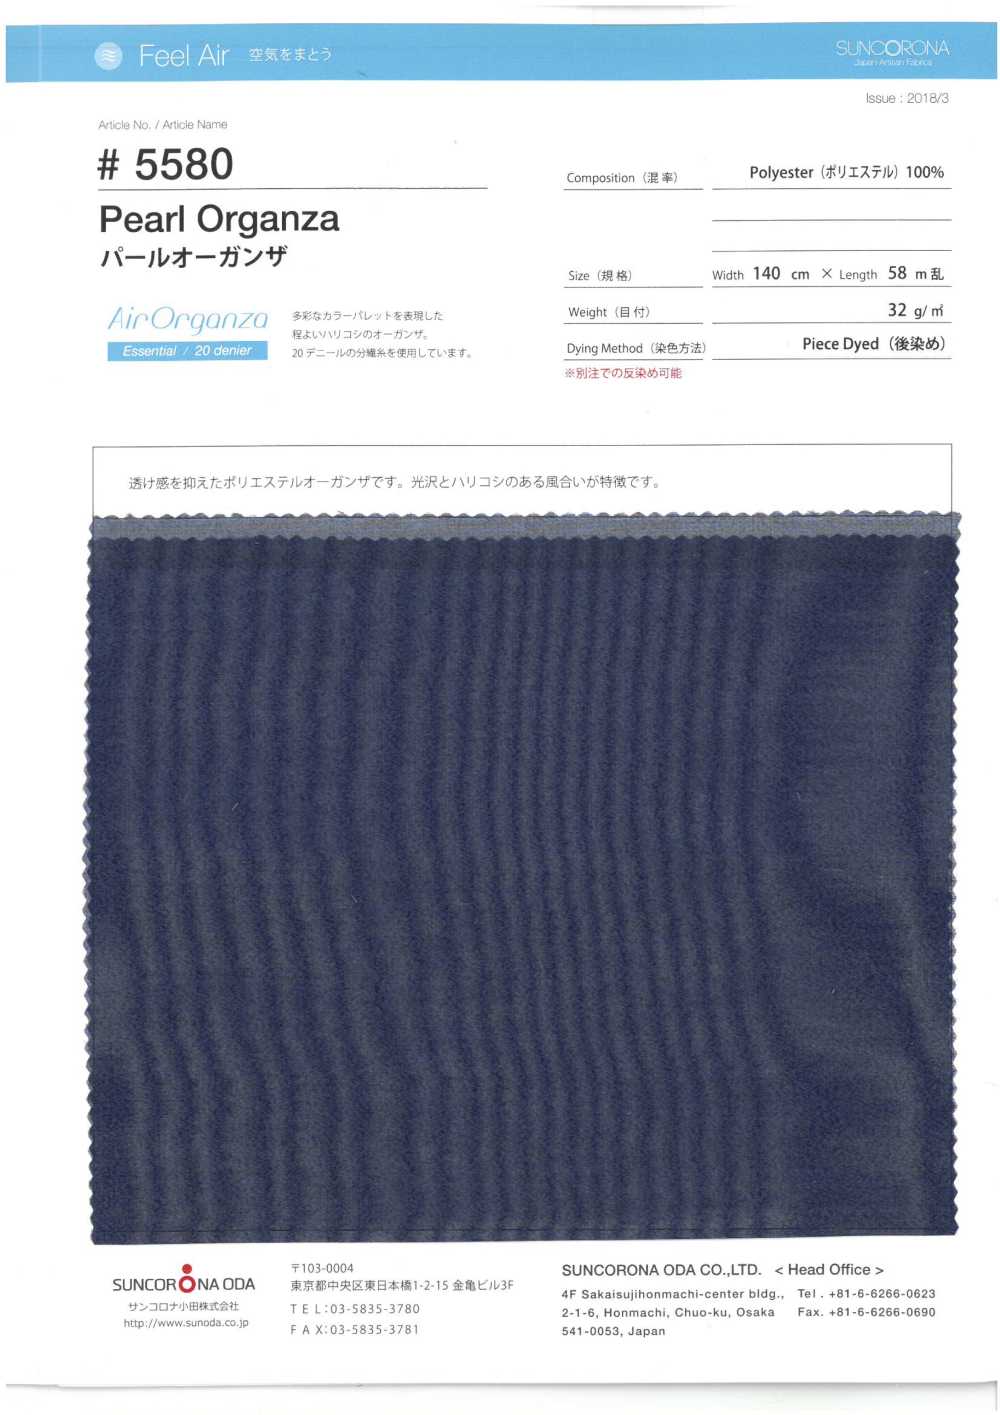 5580 Pearl Organdy[Textile / Fabric] Suncorona Oda